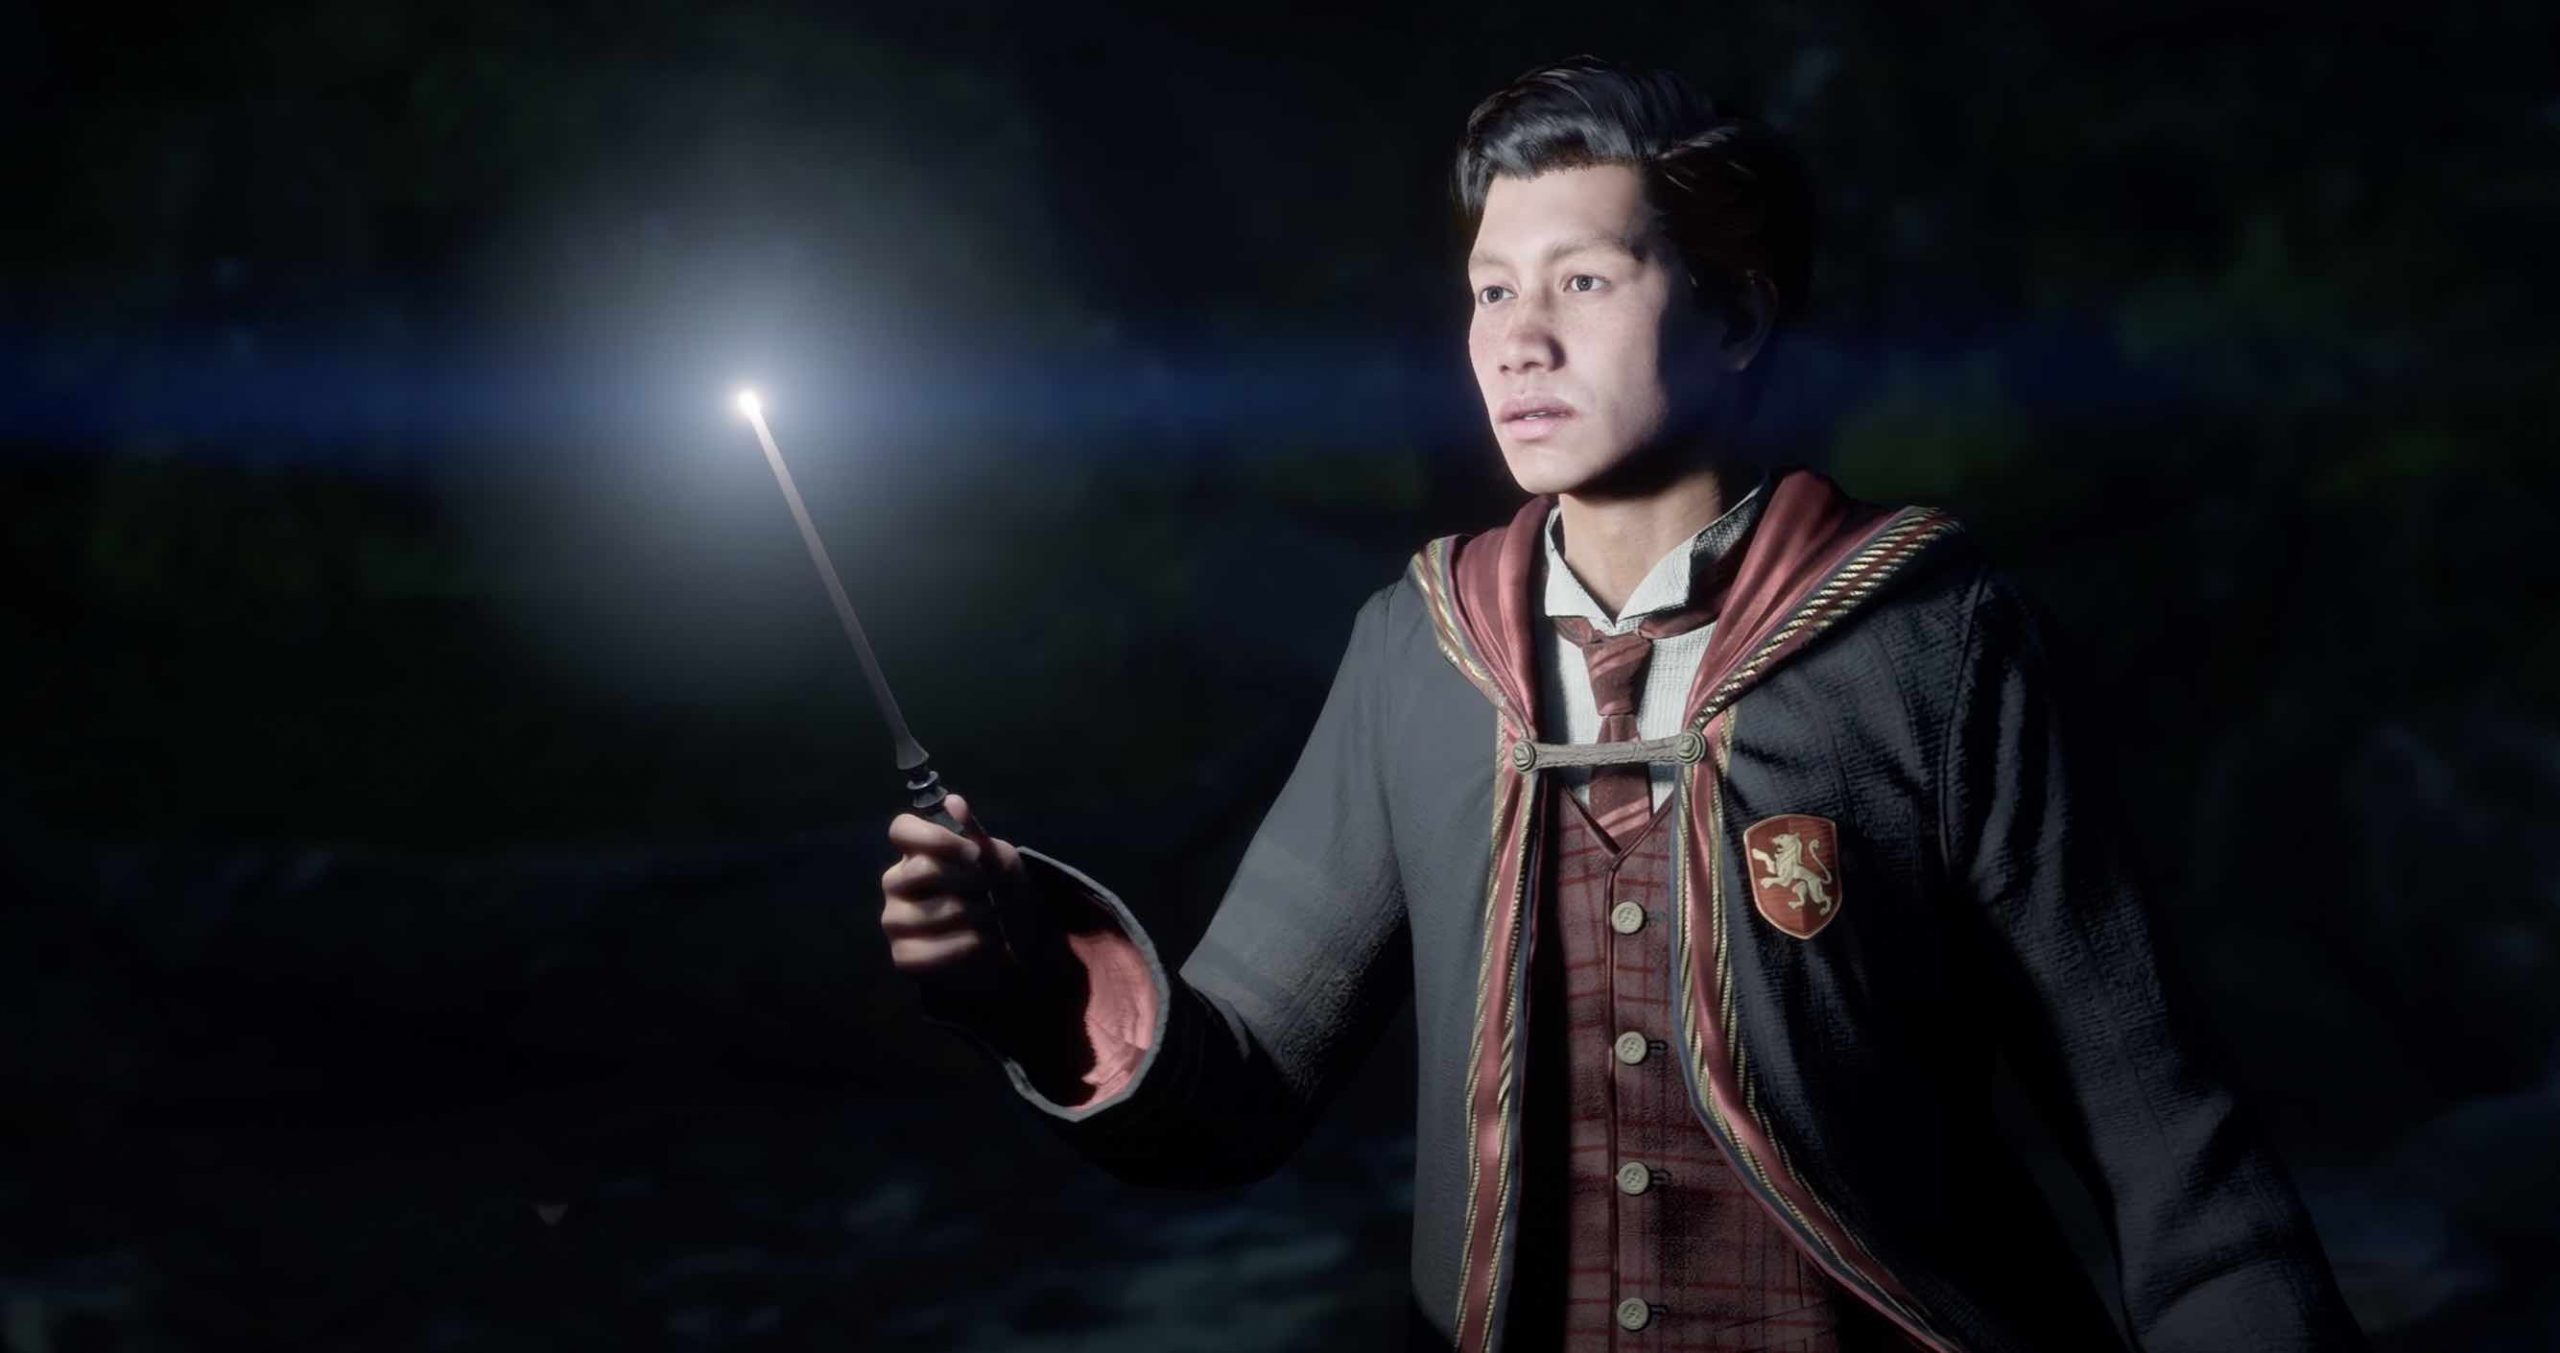 Hogwarts Legacy: New Harry Potter Game Looks Fkn Amazing